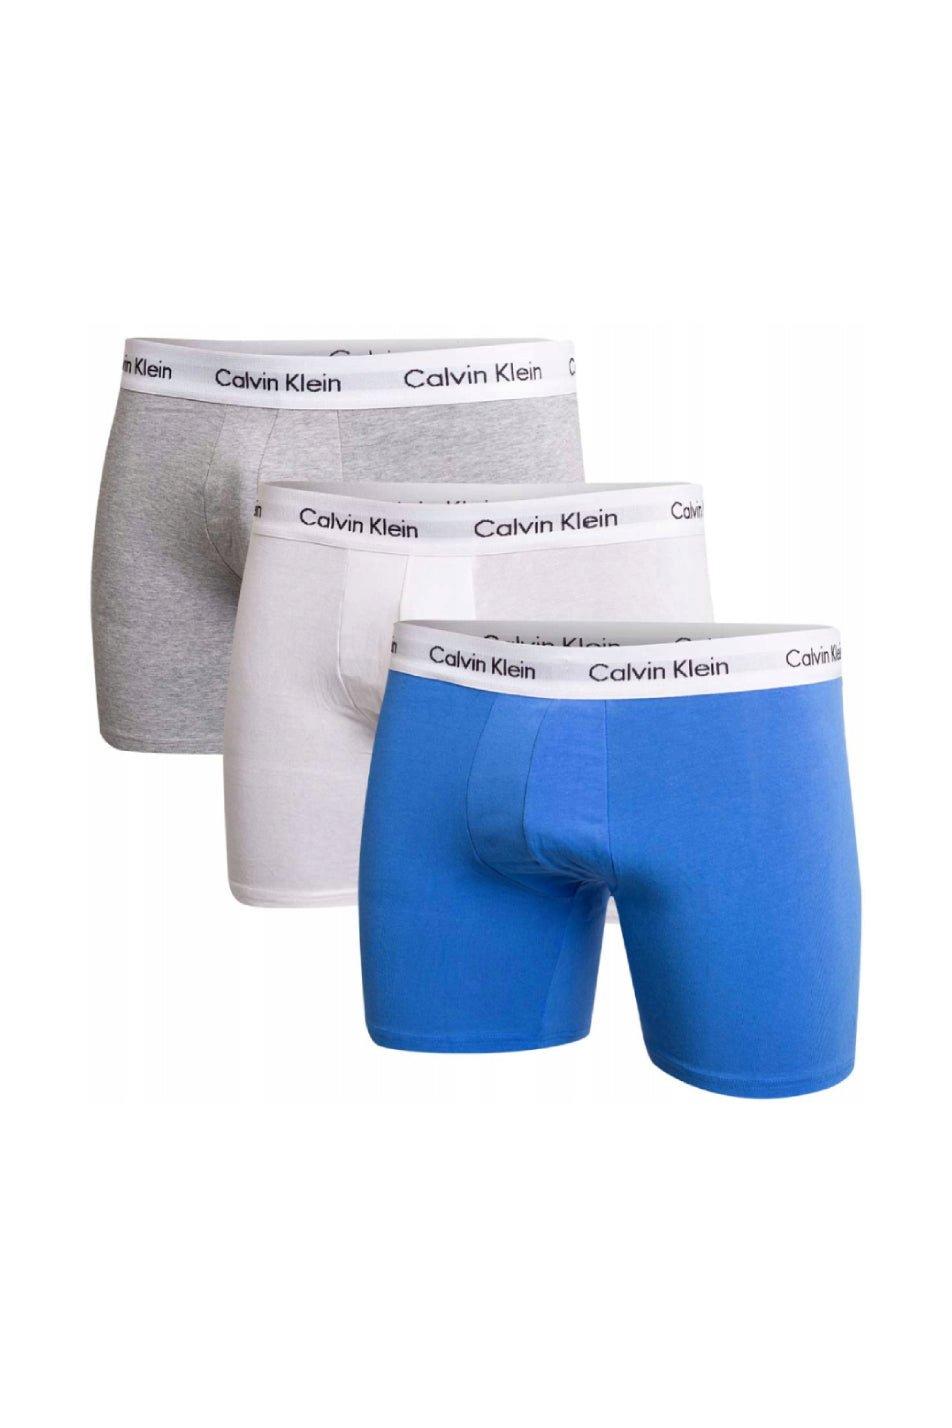 NAUTICA Boxer Briefs Mens Underwear 3 Pack MICRO Poly Blend S M L